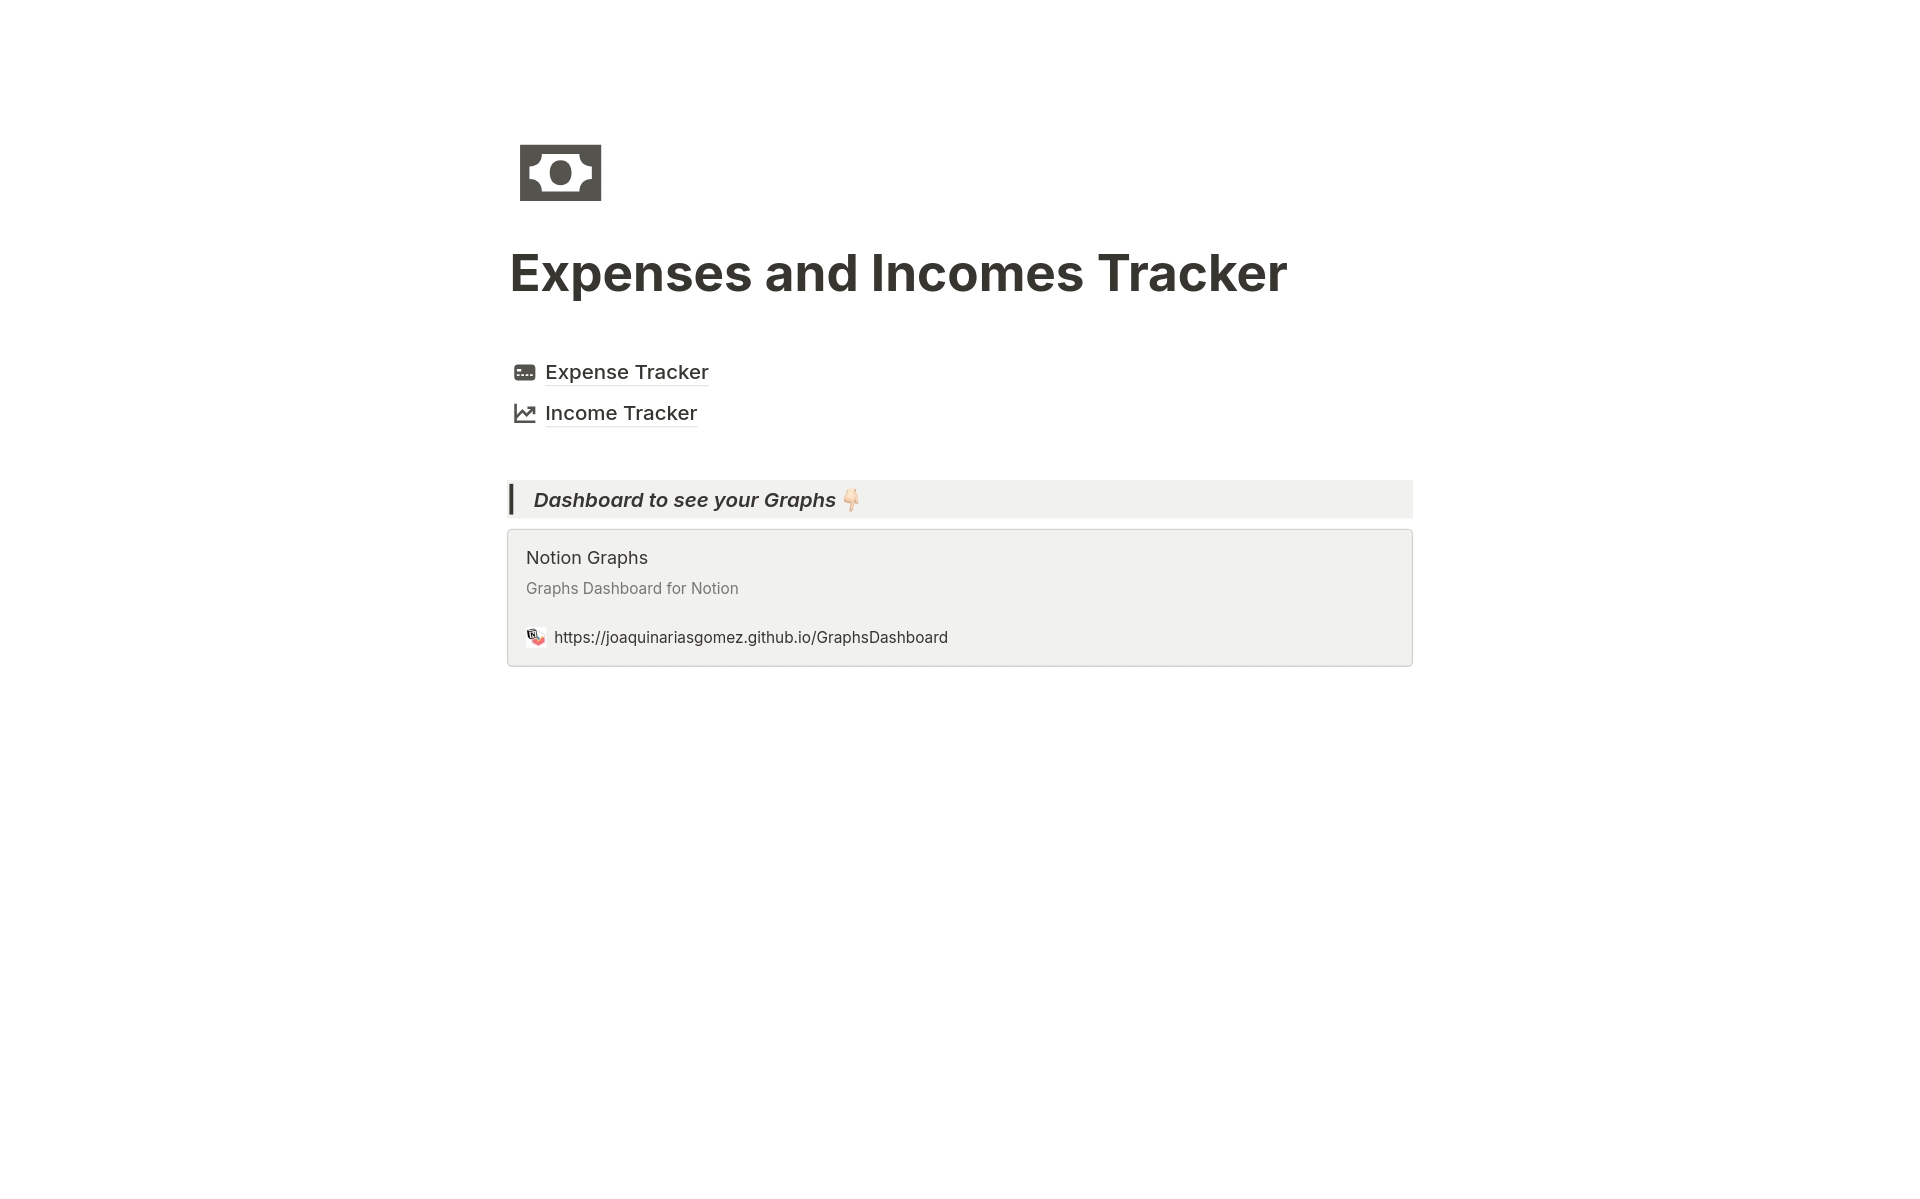 Vista previa de plantilla para Expenses and Incomes Tracker